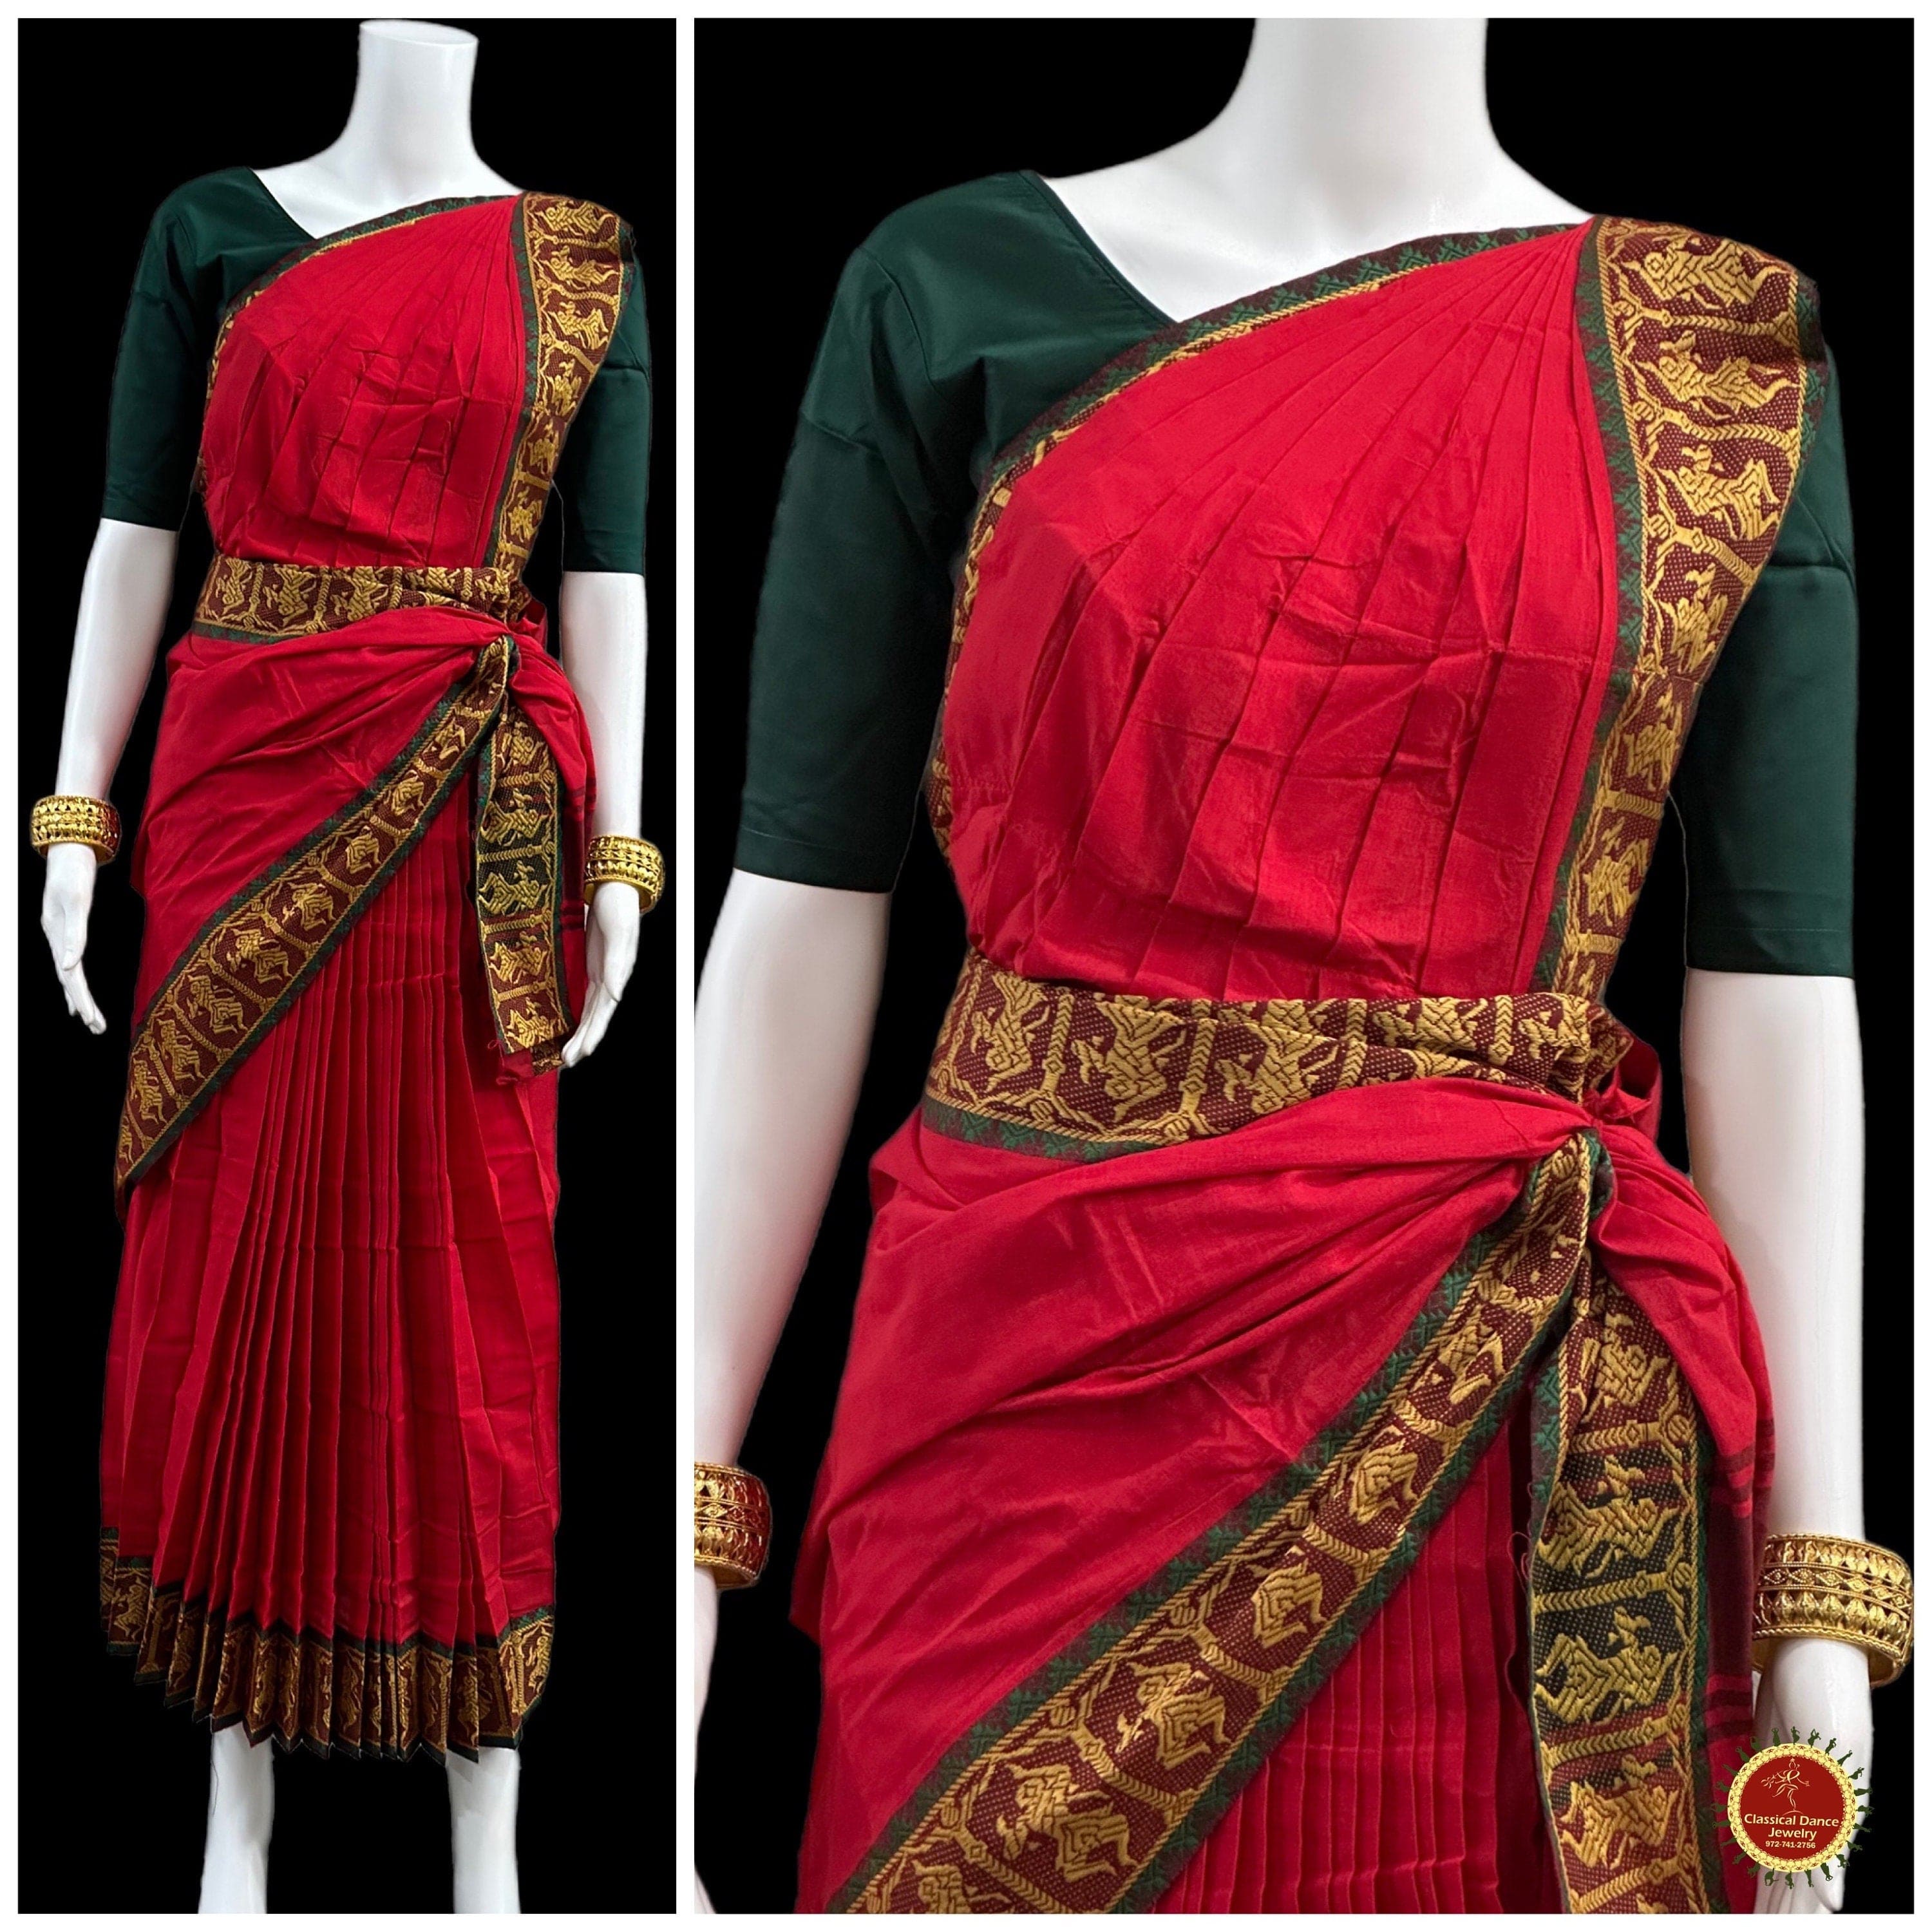 Saree Draping Styles of Karnataka | Handloom Sarees from India